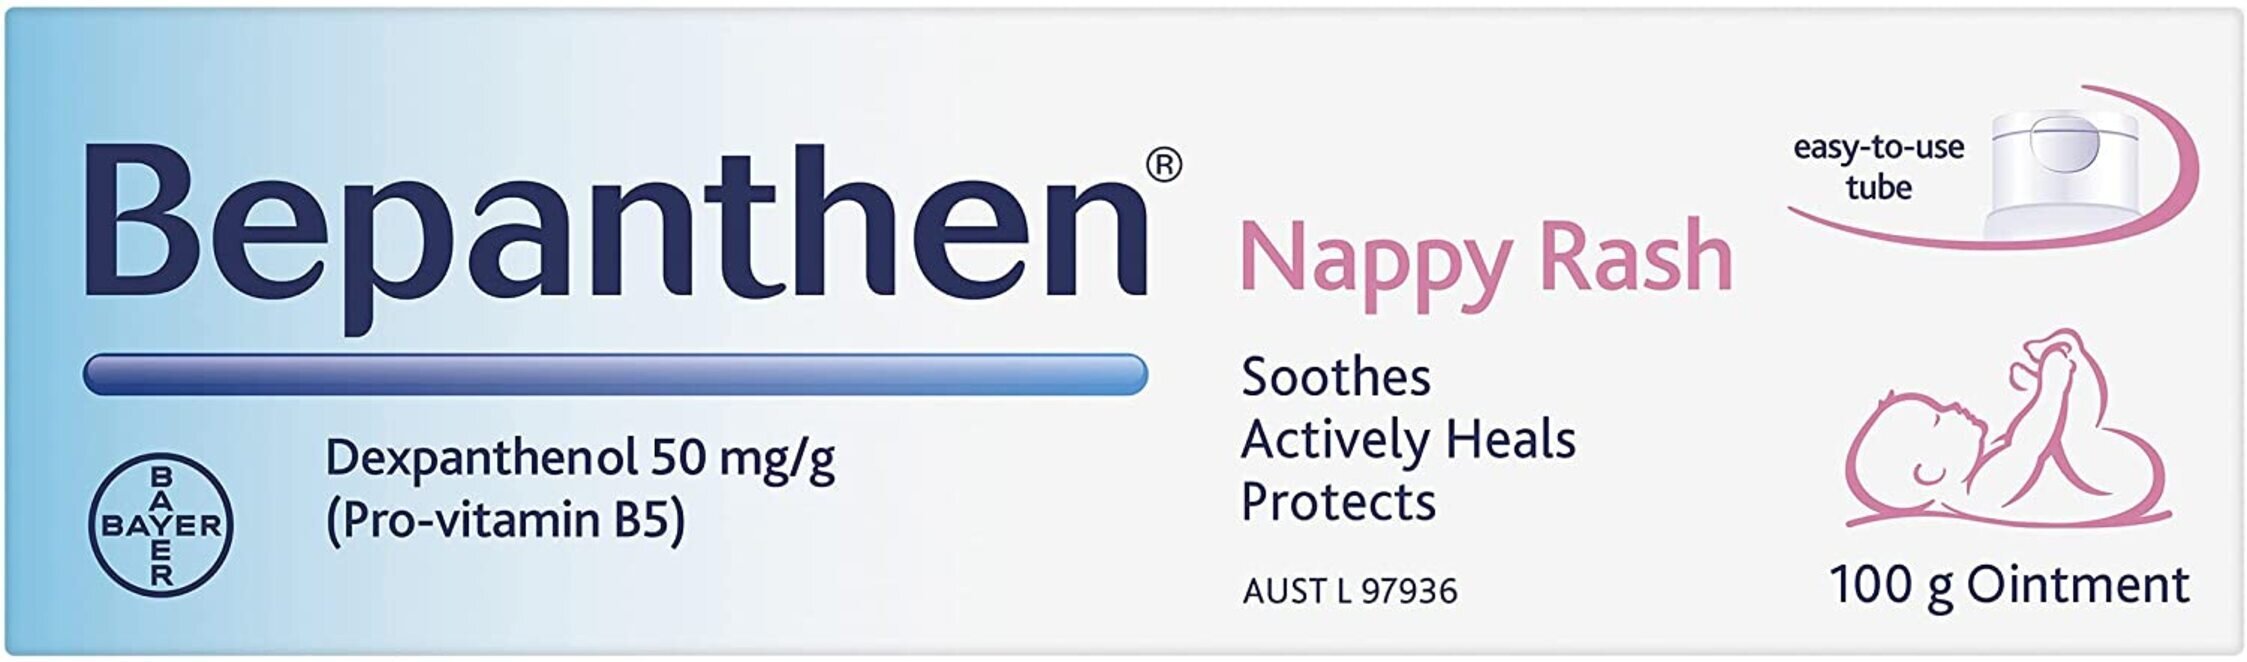 Bepanthen Nappy Rash Ointment - 100g